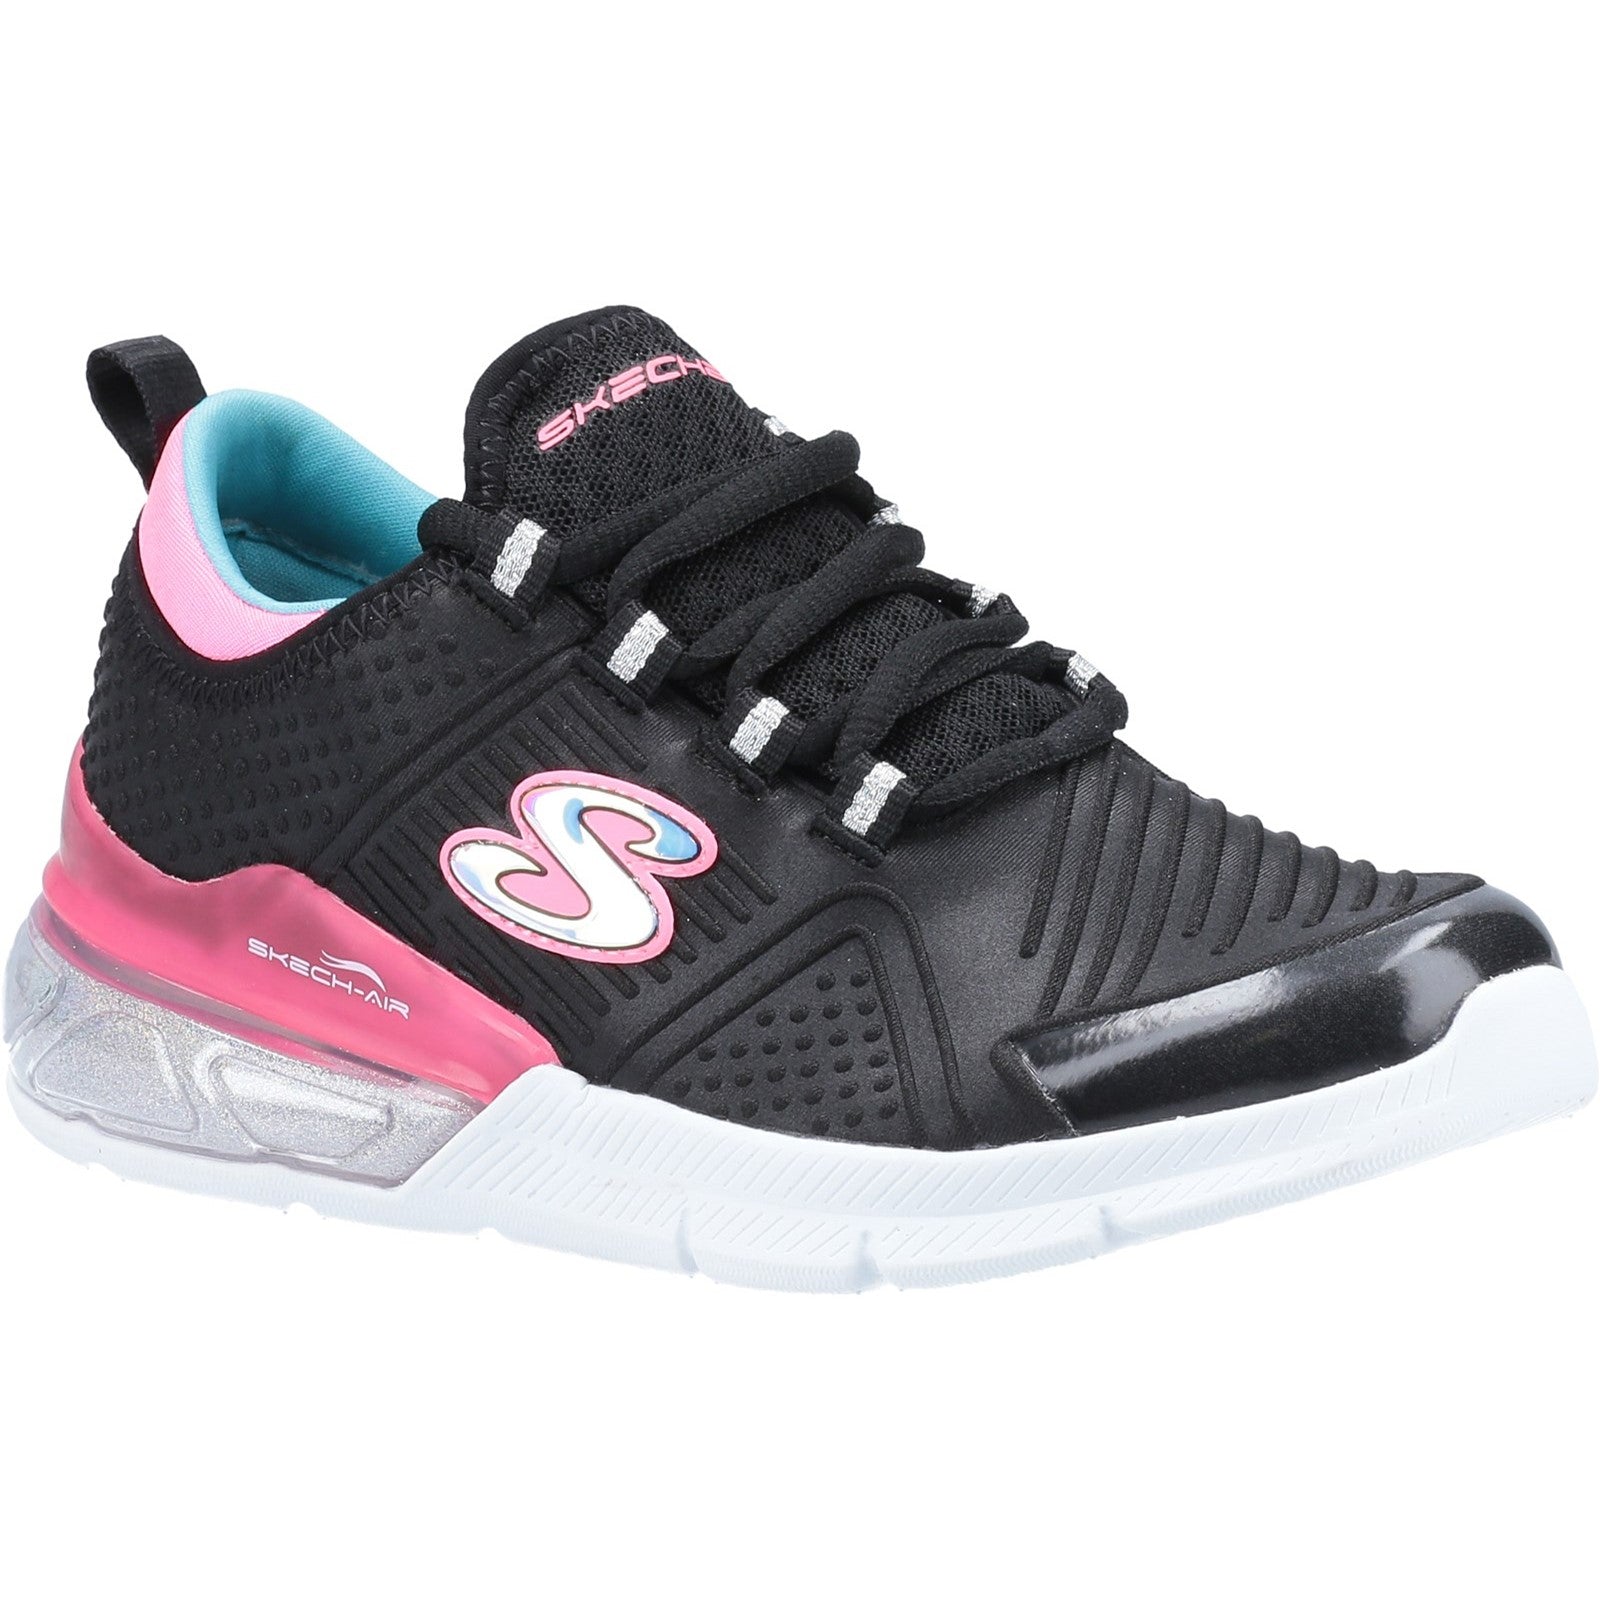 Skechers Skech-Air Sparkle Optical Shine Sports Shoe